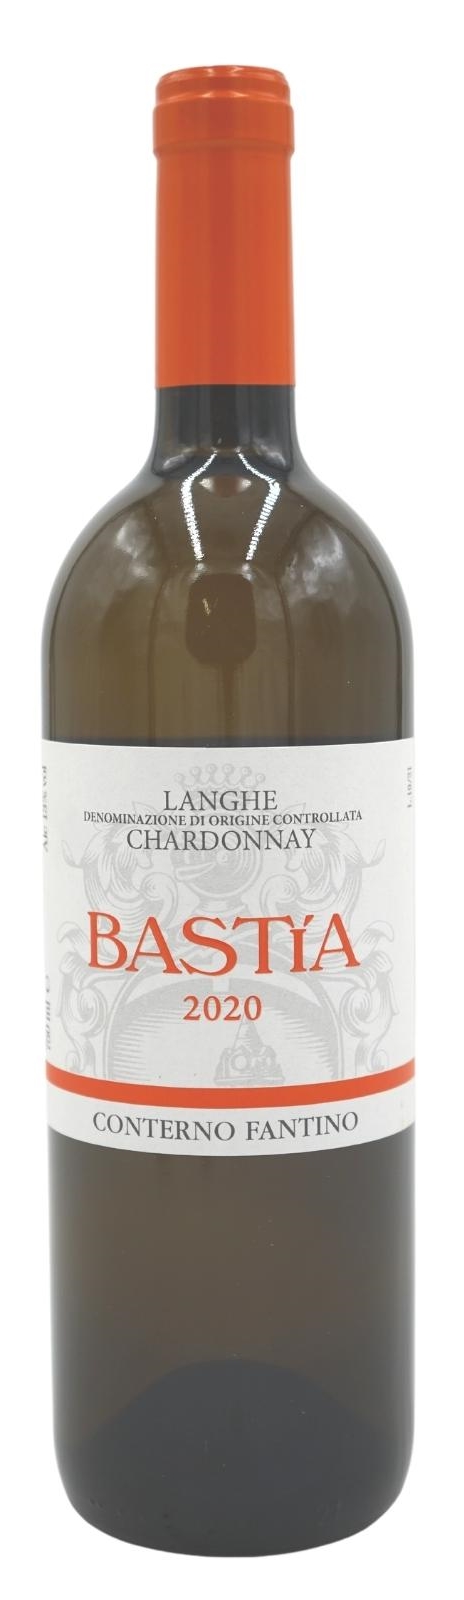 2020 Bastia Chardonnay *bio*